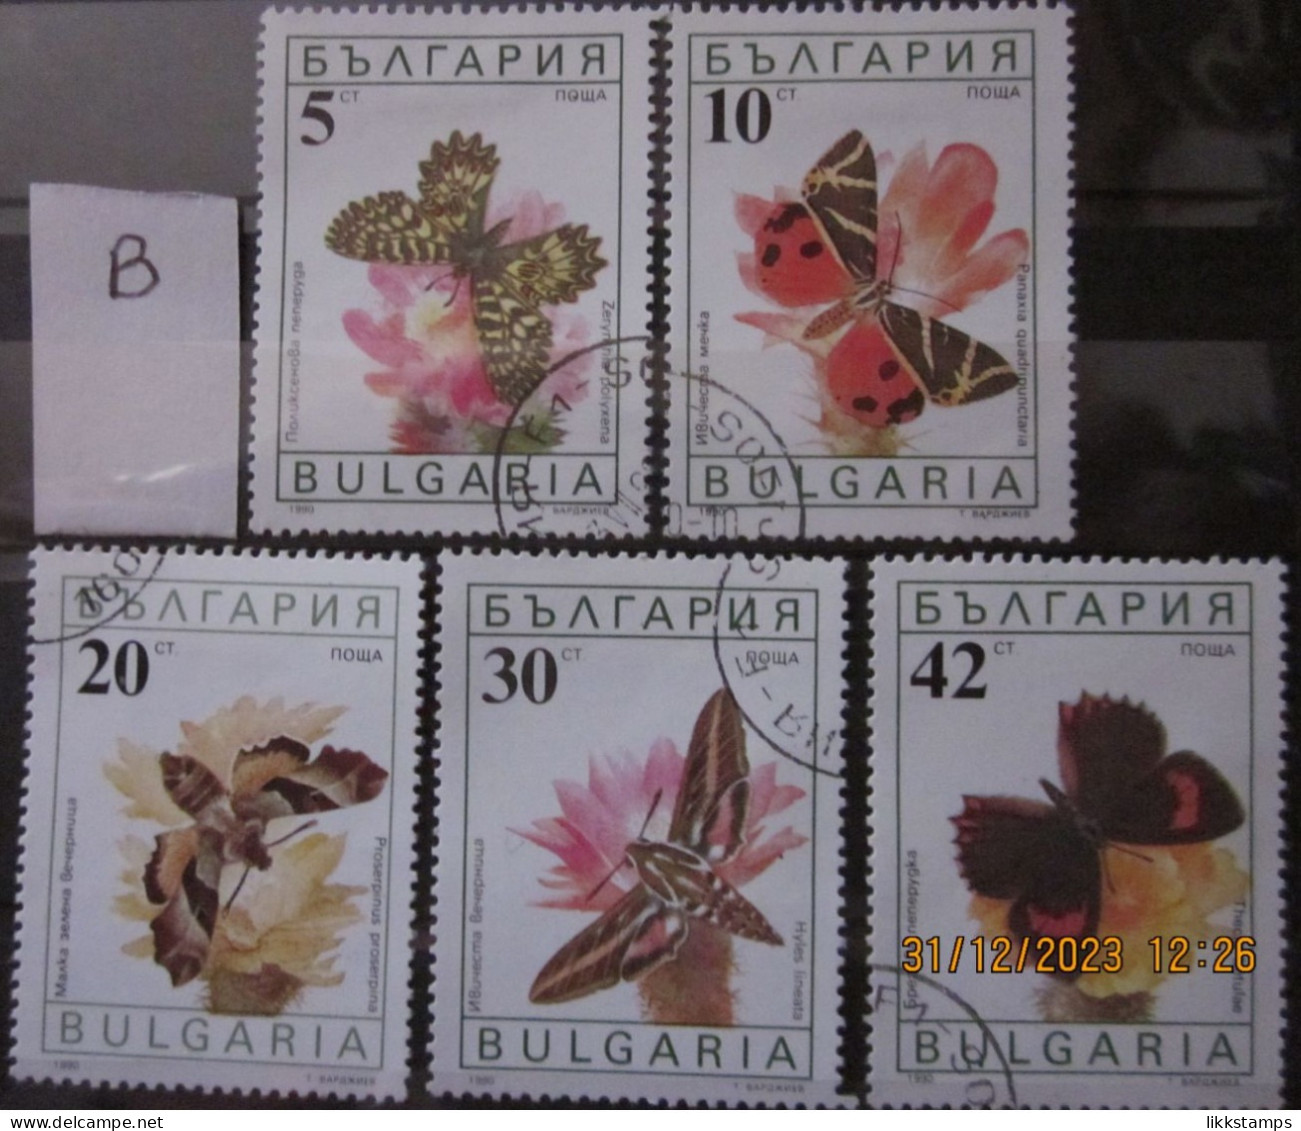 BULGARIA 1990 ~ S.G. 3699 - 3703, ~ 'LOT B' ~ BUTTERFLIES AND MOTHS. ~  VFU #02917 - Usados